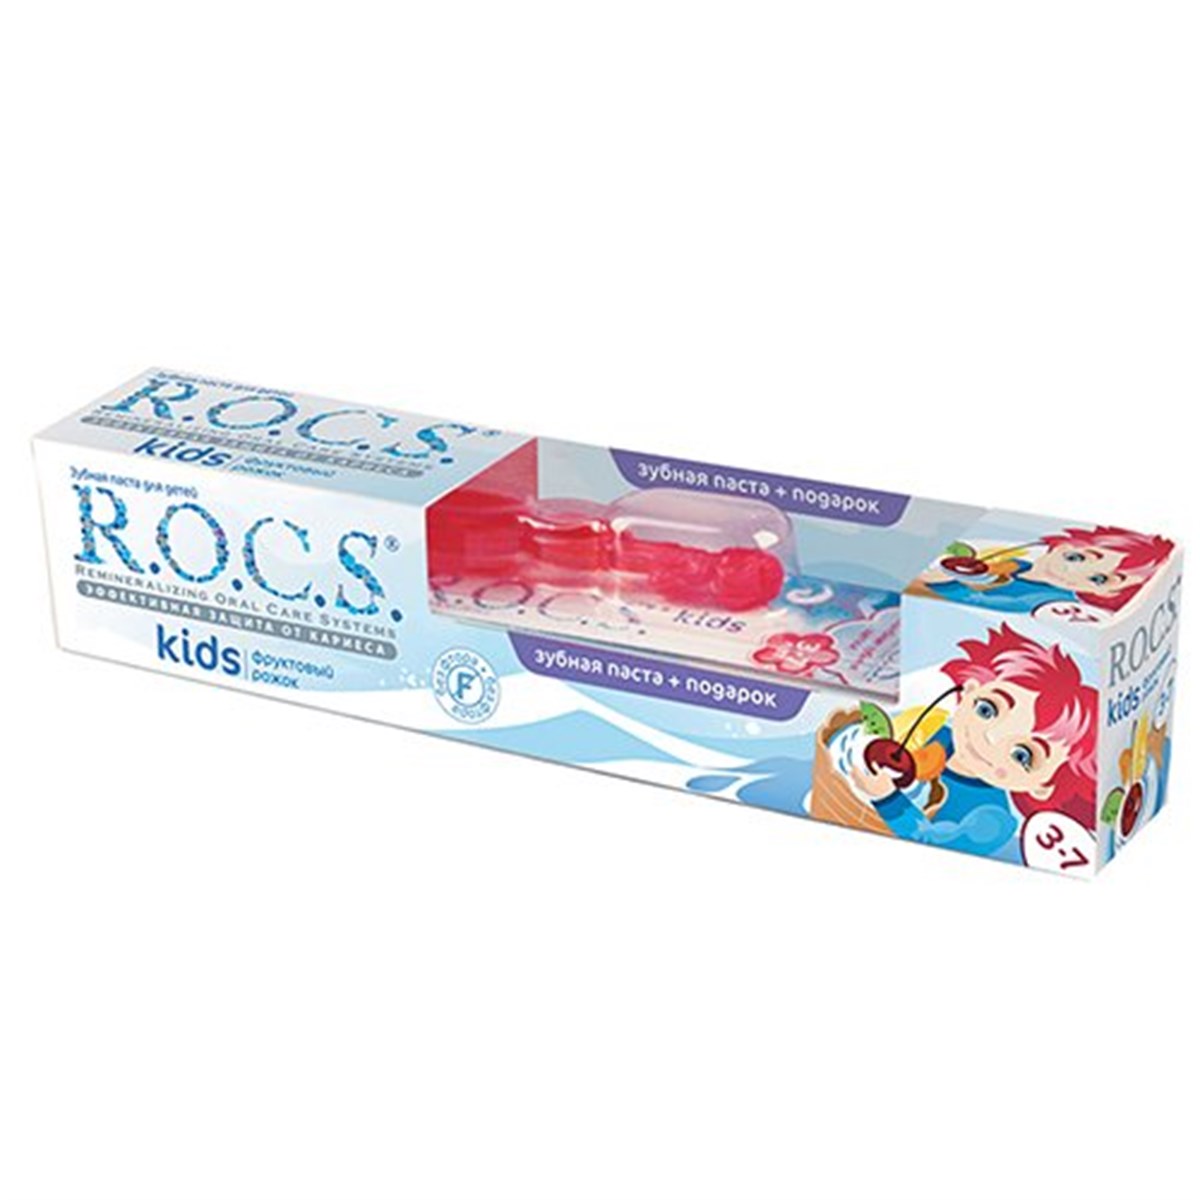 Rocs Kids Fruity Cone 3-7 Age Toohtpaste + Toothbrush-LeylekKapida.com